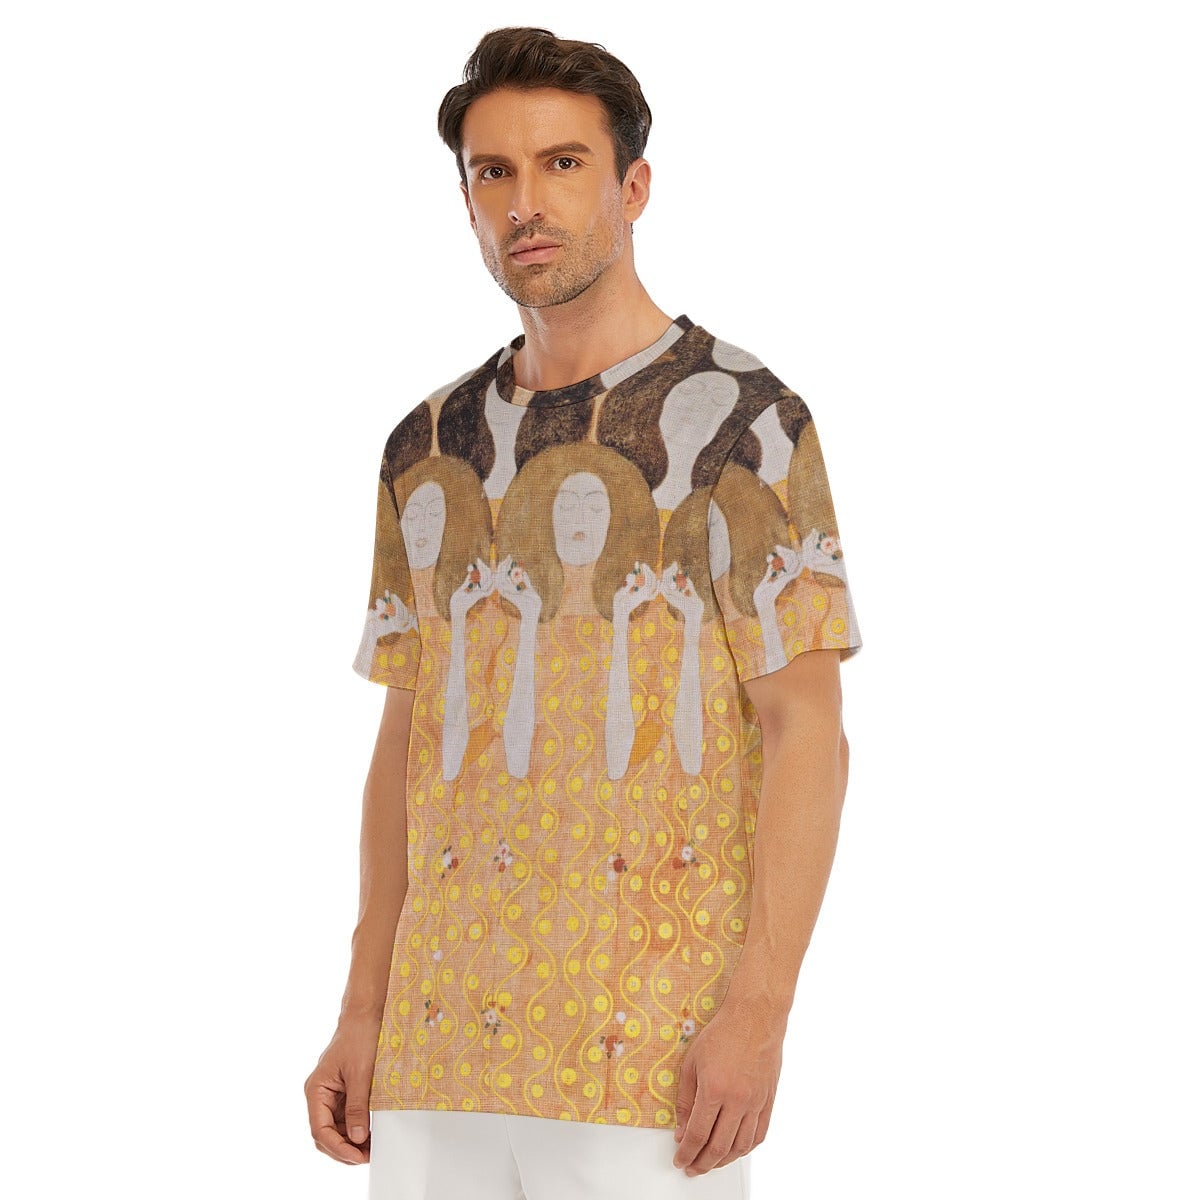 Gustav Klimt’s Beethoven Frieze T-Shirt